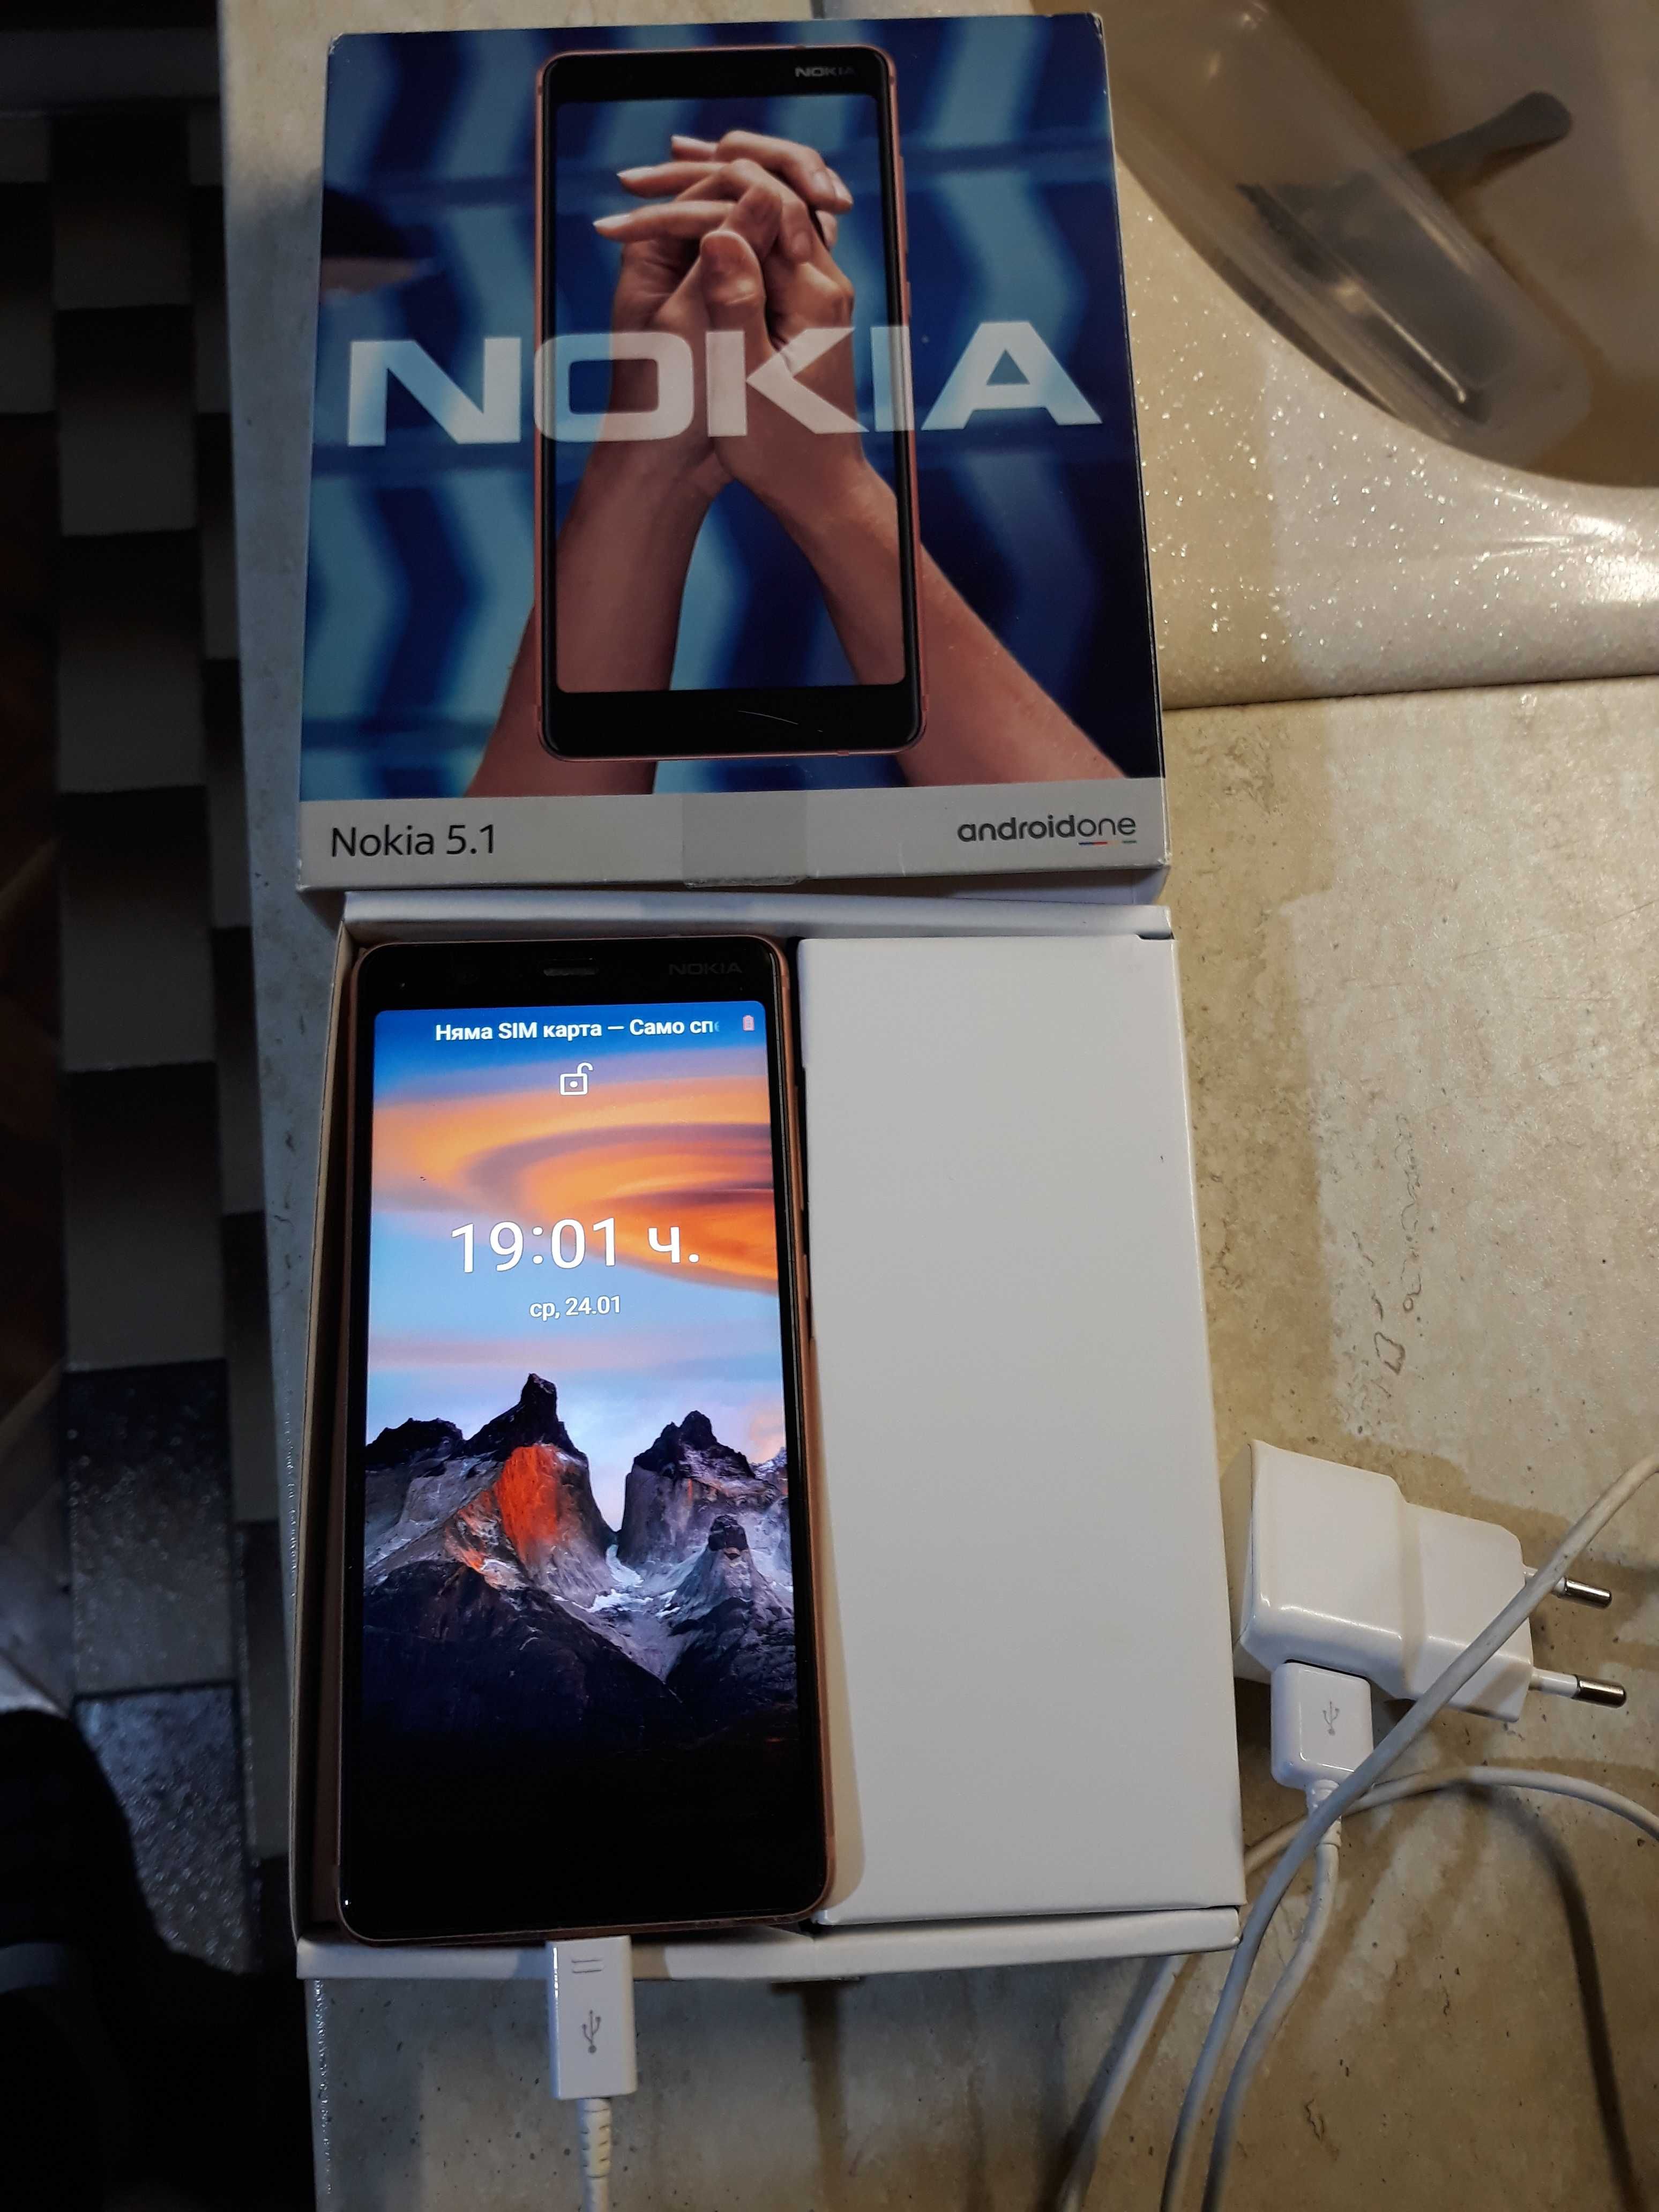 Nokia 5.1 Android